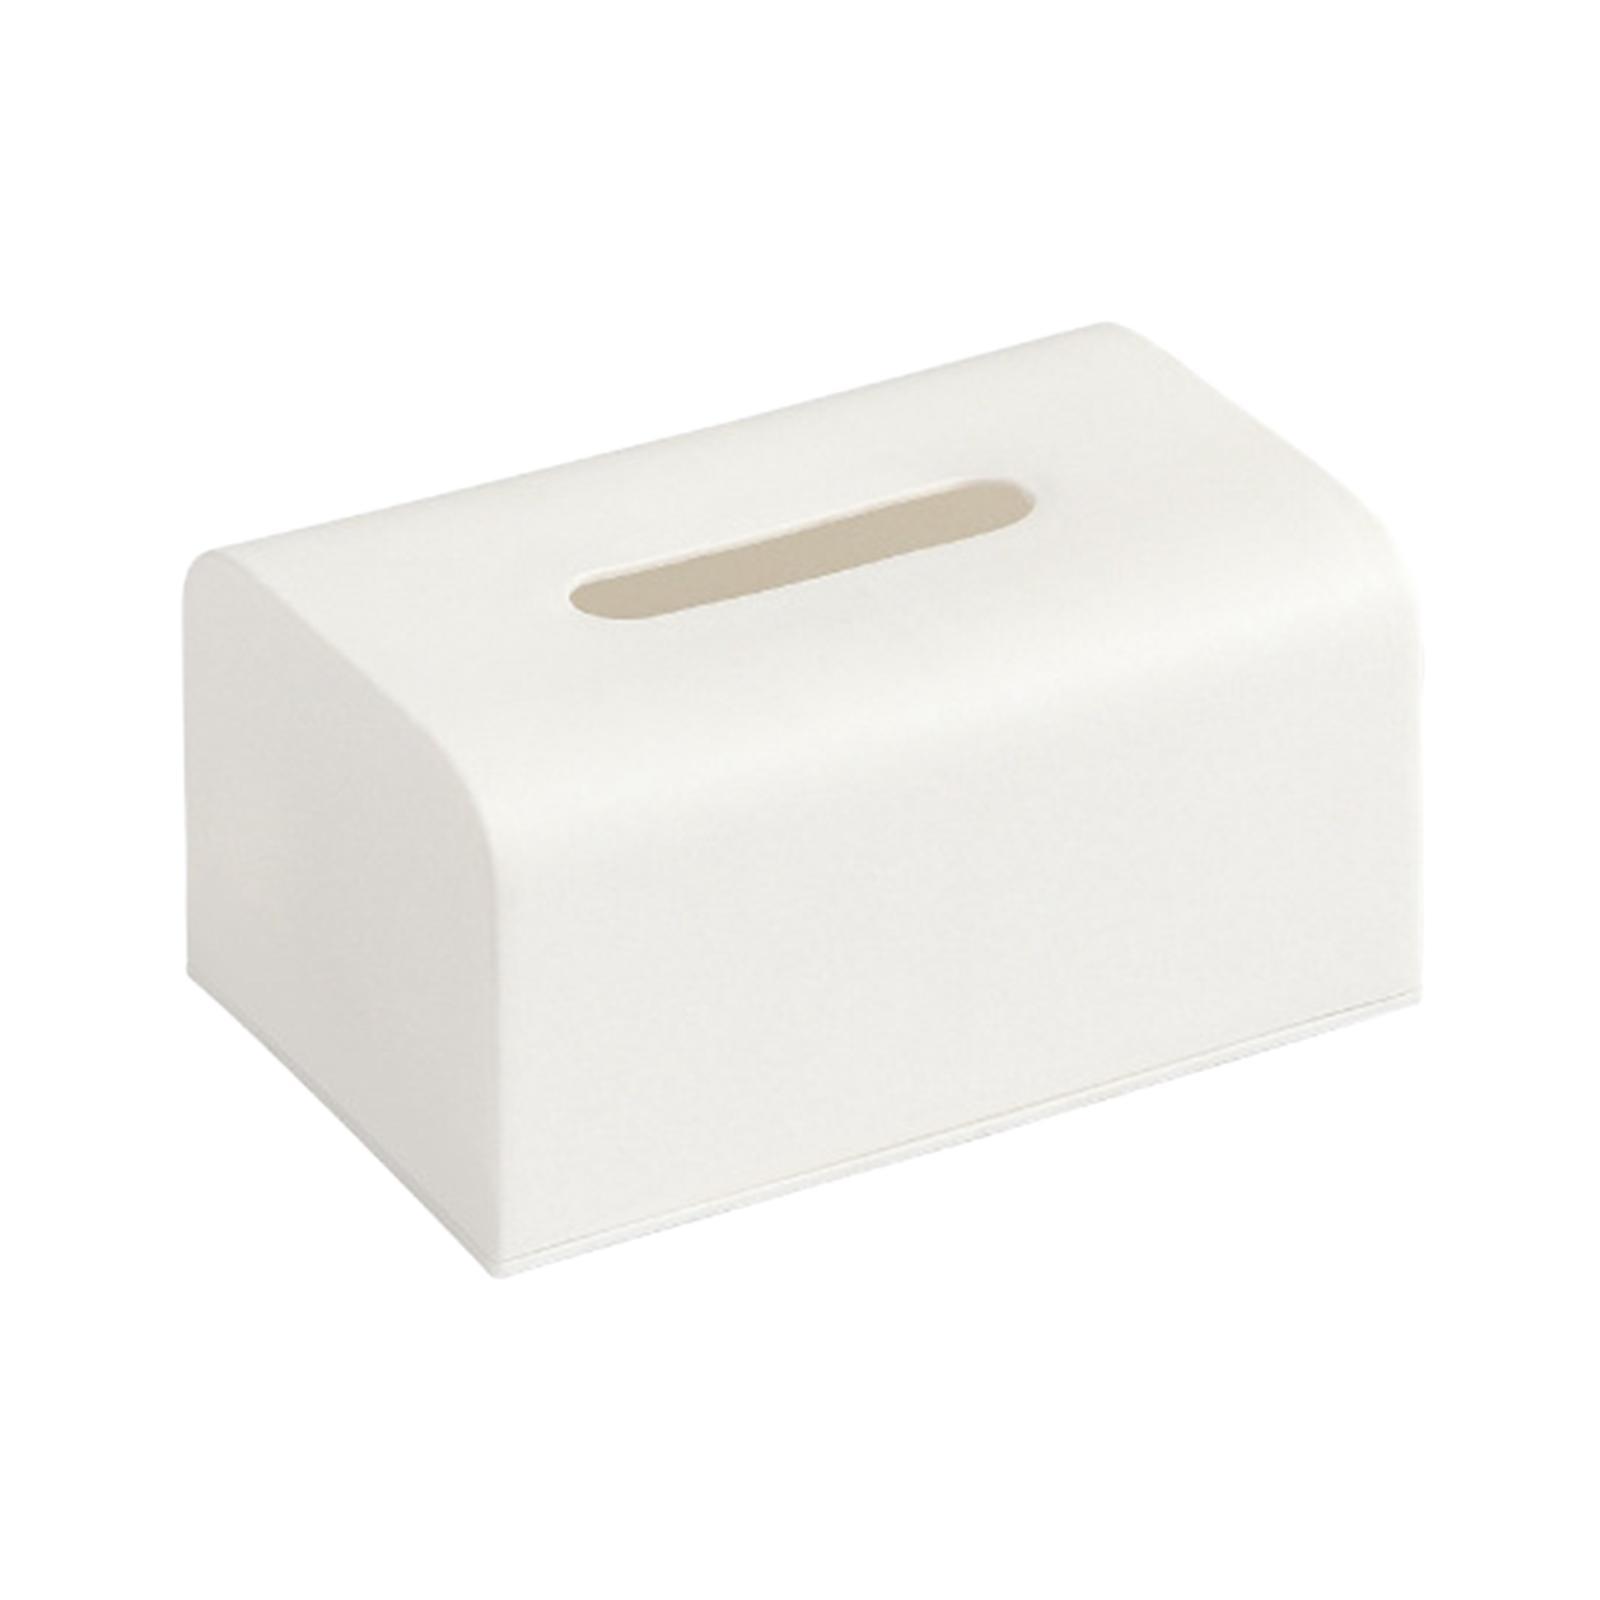 Tissue Dispenser Box Bathroom Toilet Paper Holder Tissue Paper Holder Tissue Cover Removable Tissue Box Tissue Box Cover for Washroom Office